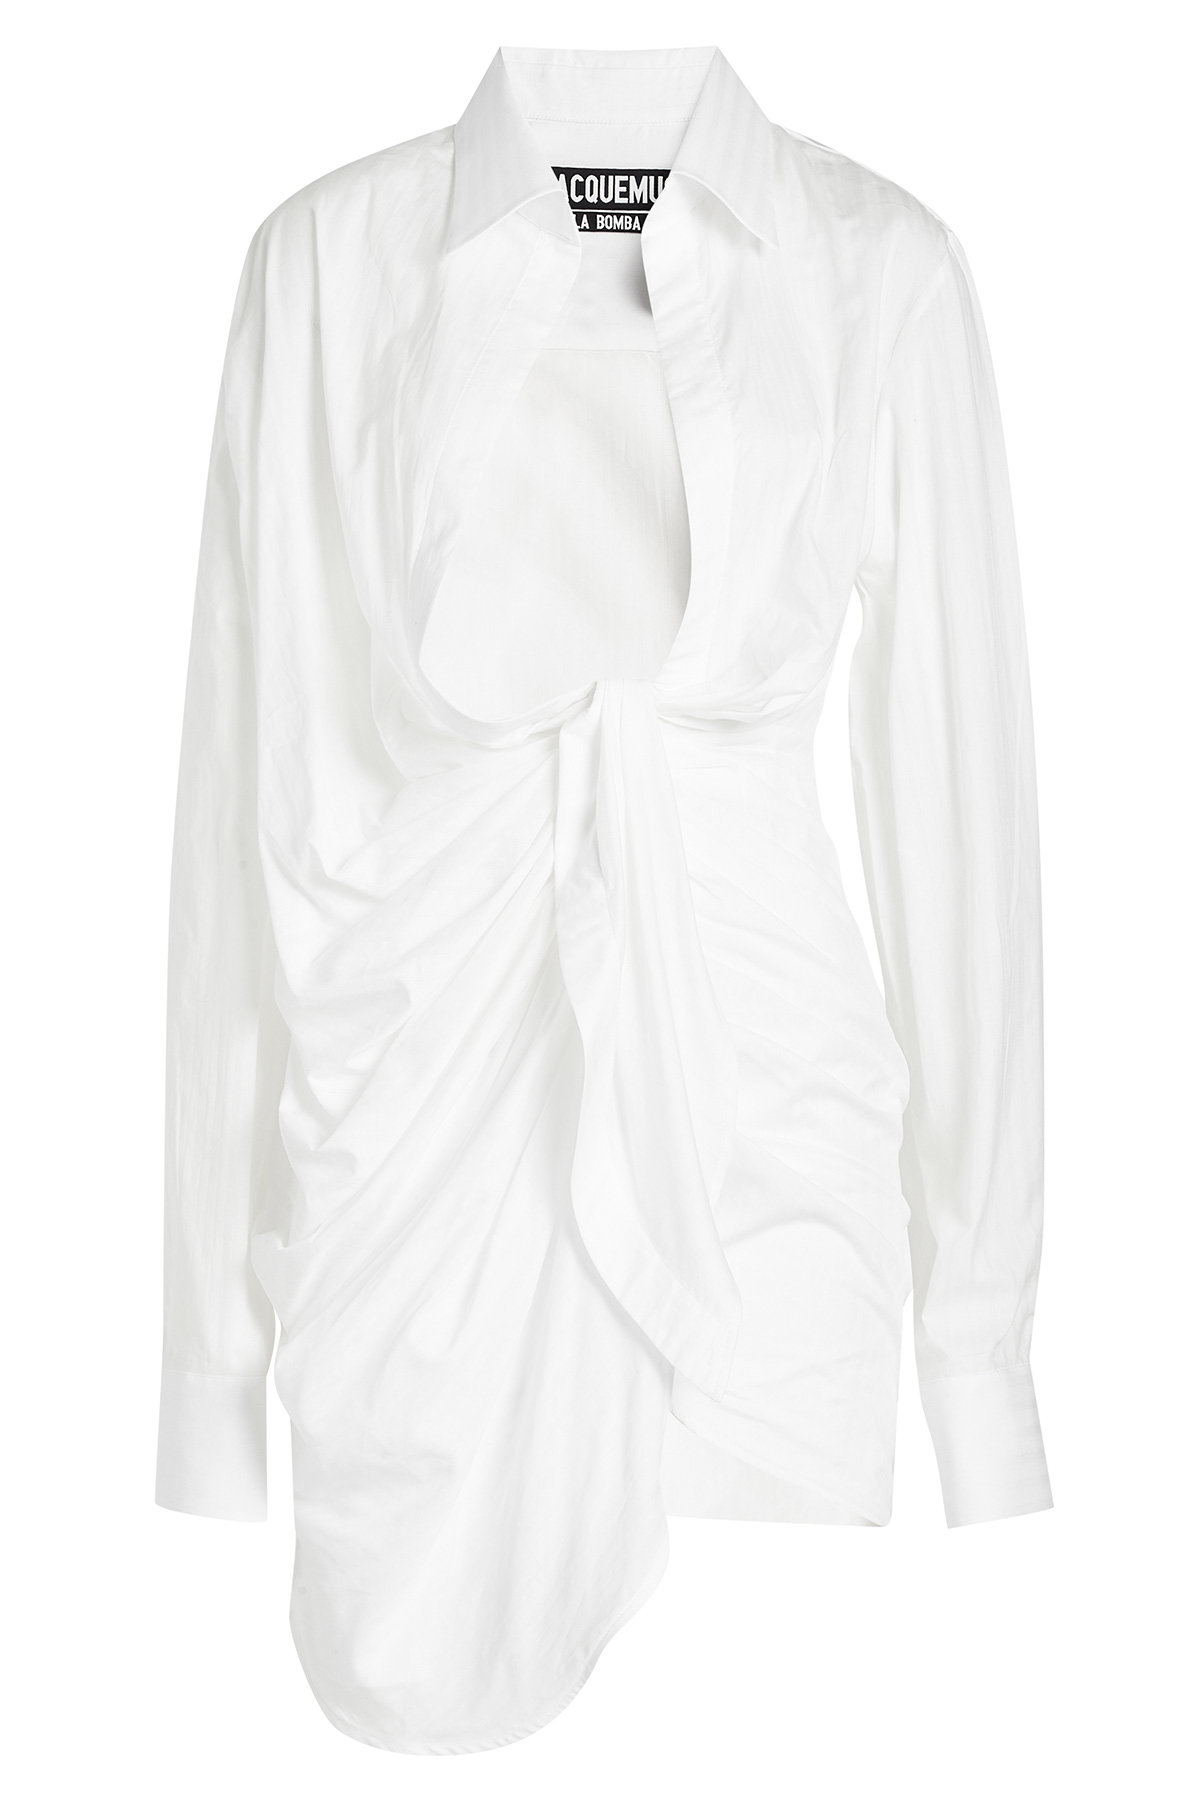 Jacquemus - Bahia Knotted Cotton Shirt